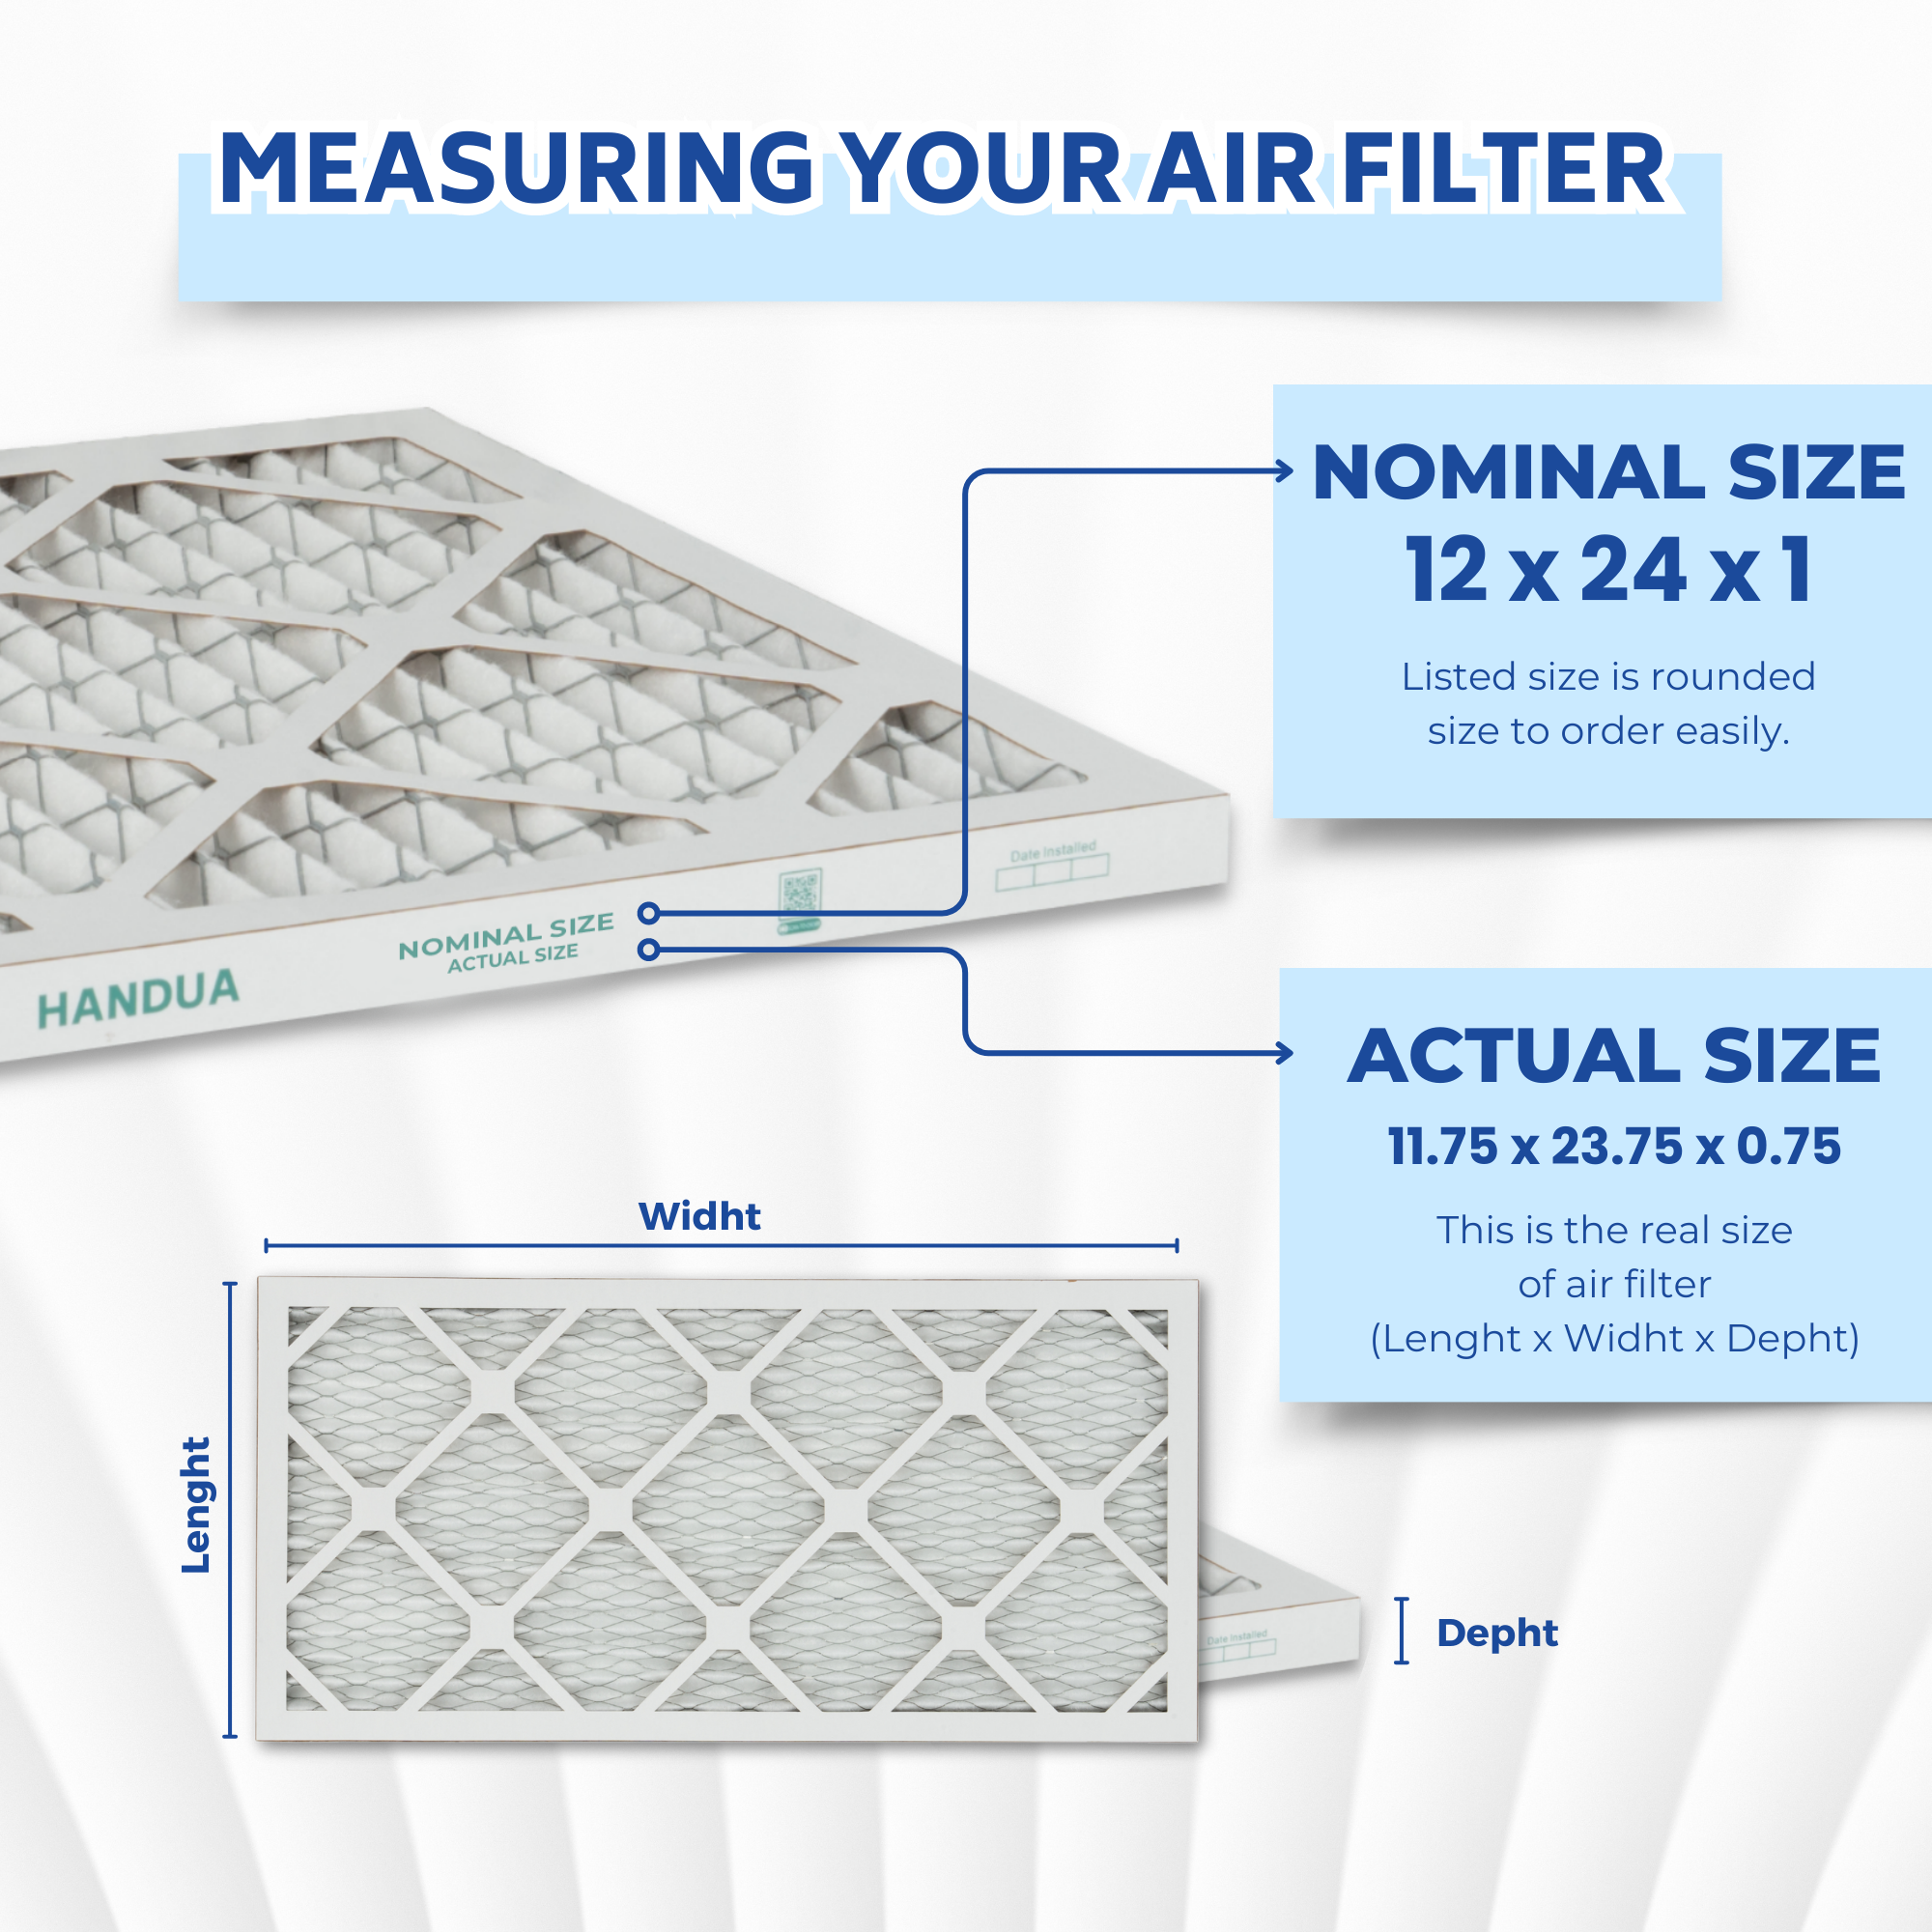 Handua 12x24x1 Air Filter MERV 8 Dust Control, Plated Furnace AC Air Replacement Filter, 4 Pack (Actual Size: 11.75" x 23.75" x 0.75")